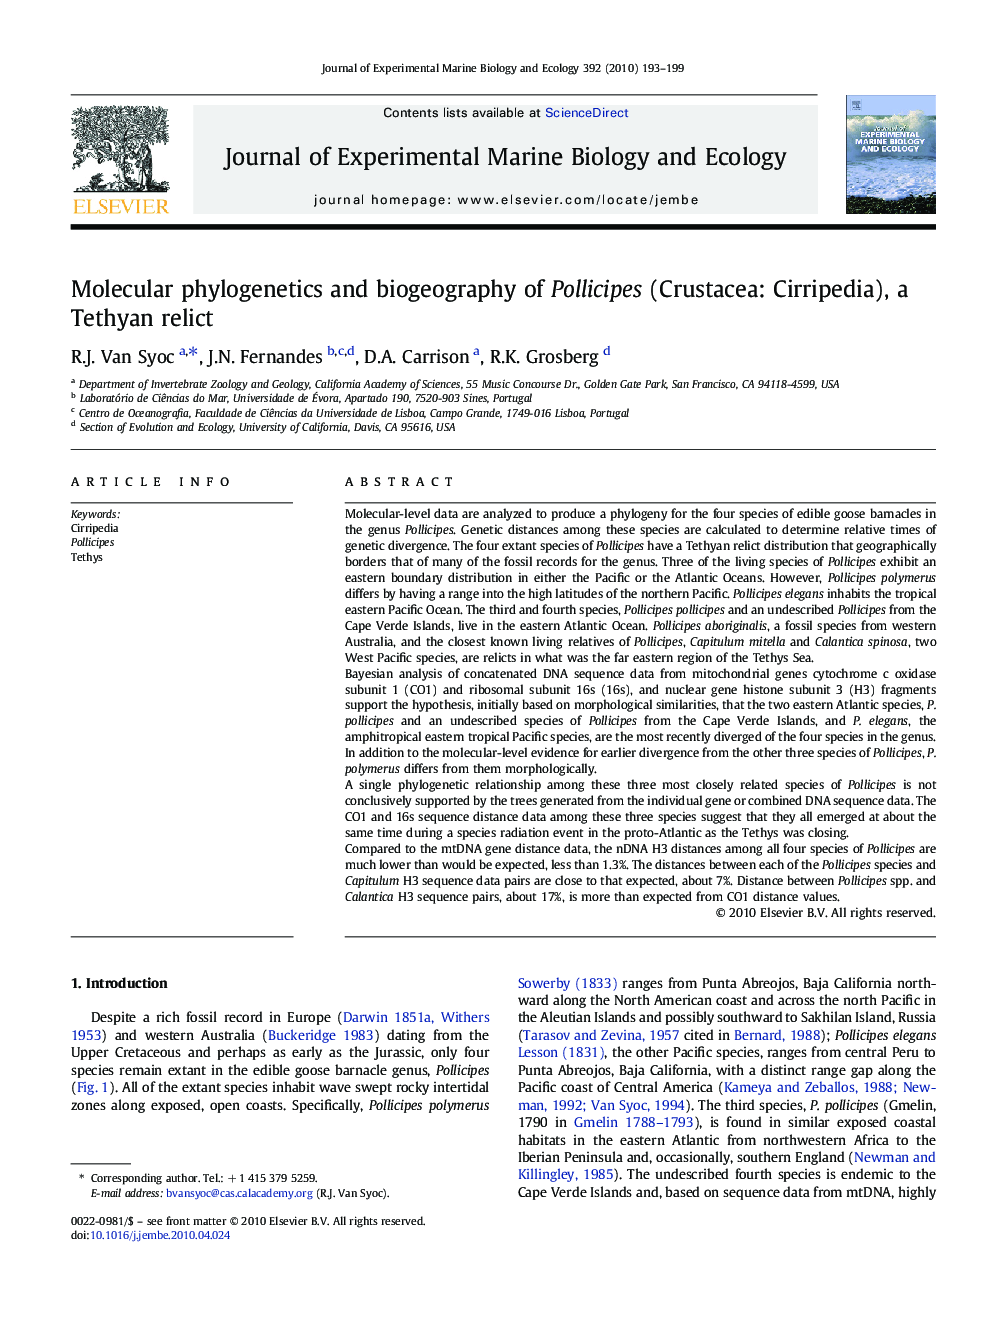 Molecular phylogenetics and biogeography of Pollicipes (Crustacea: Cirripedia), a Tethyan relict